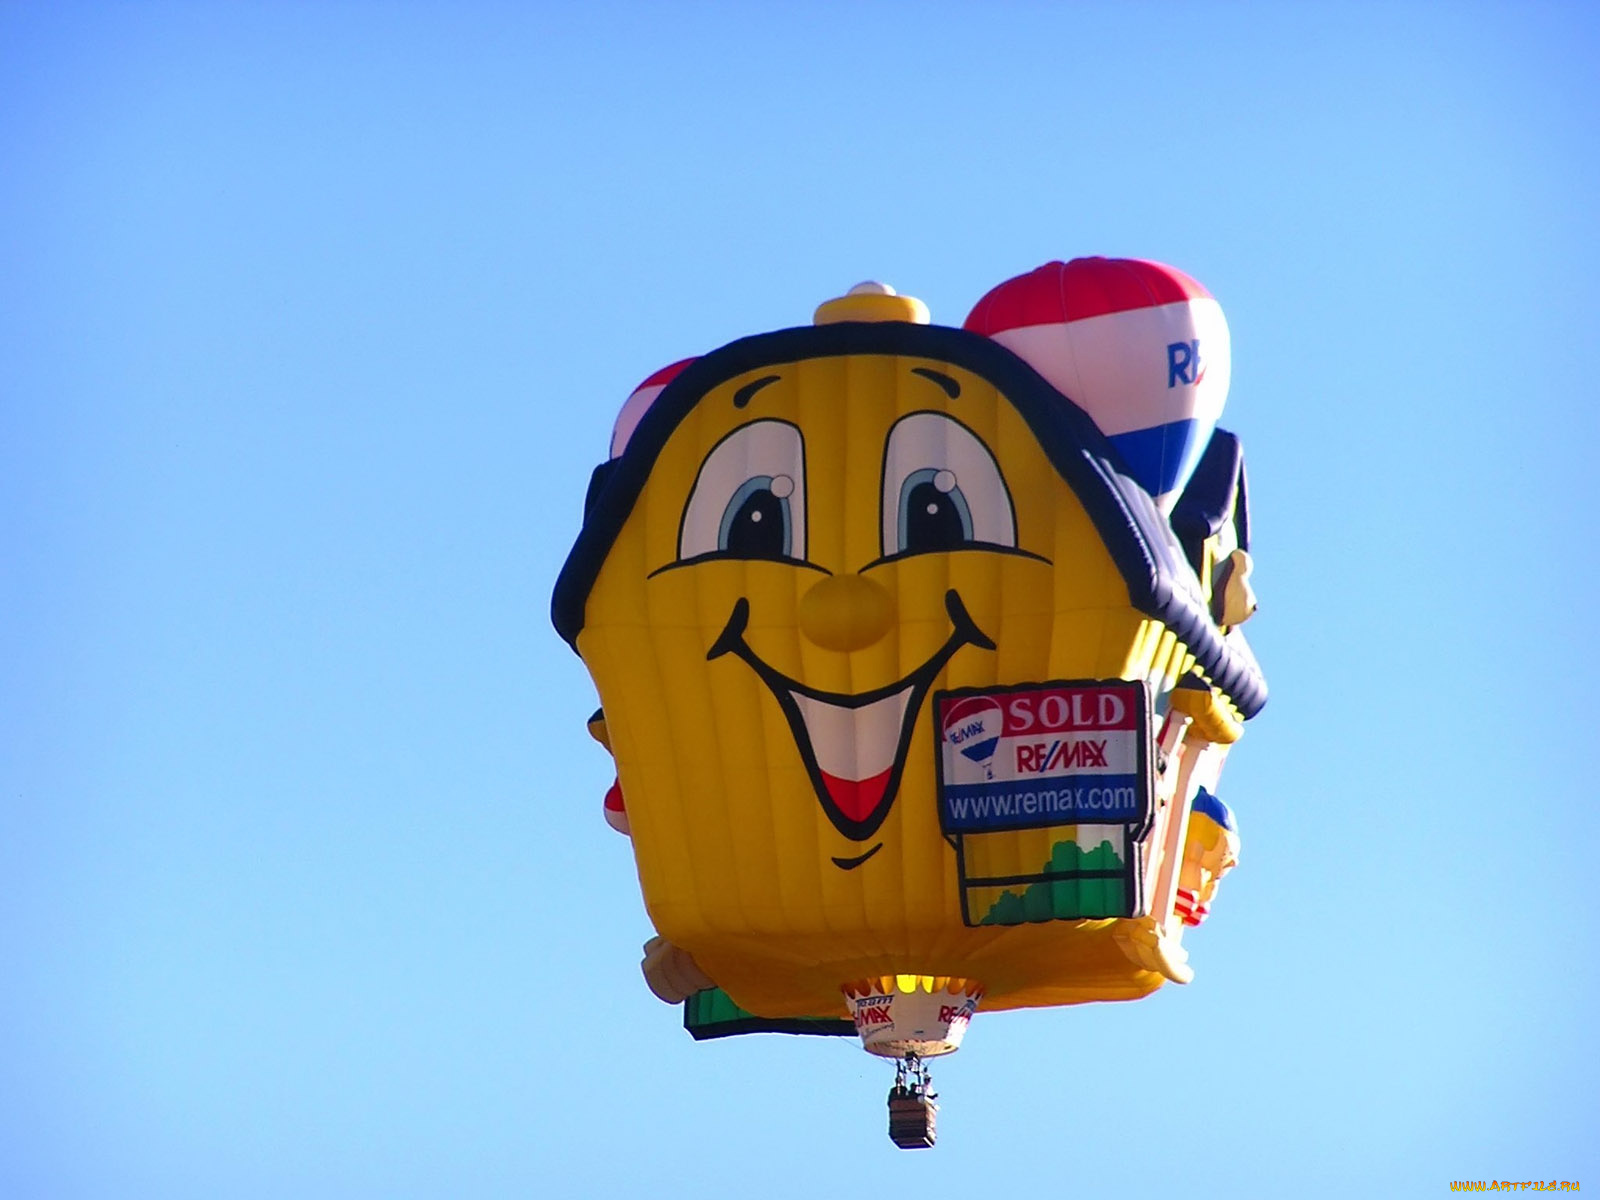 remax, real, estate, balloon, авиация, воздушные, шары